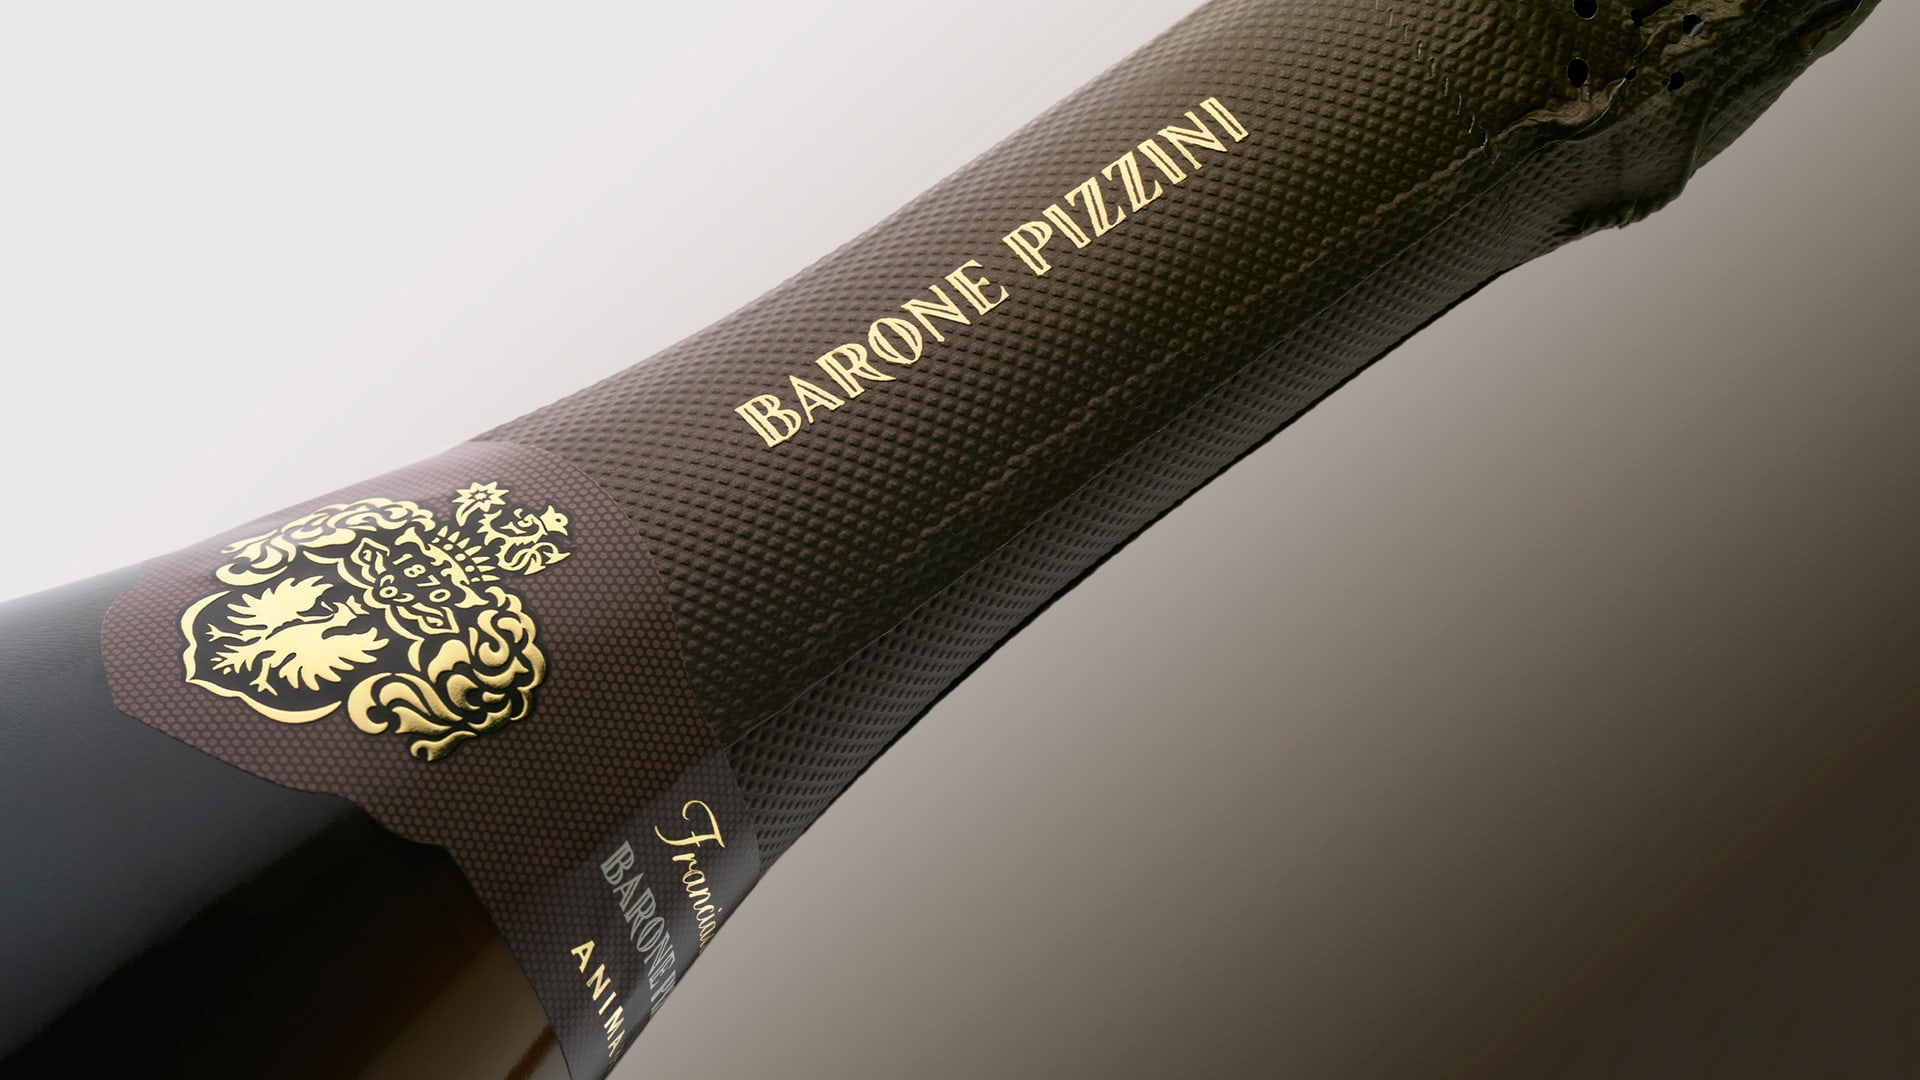 Barone Pizzini capsula branding